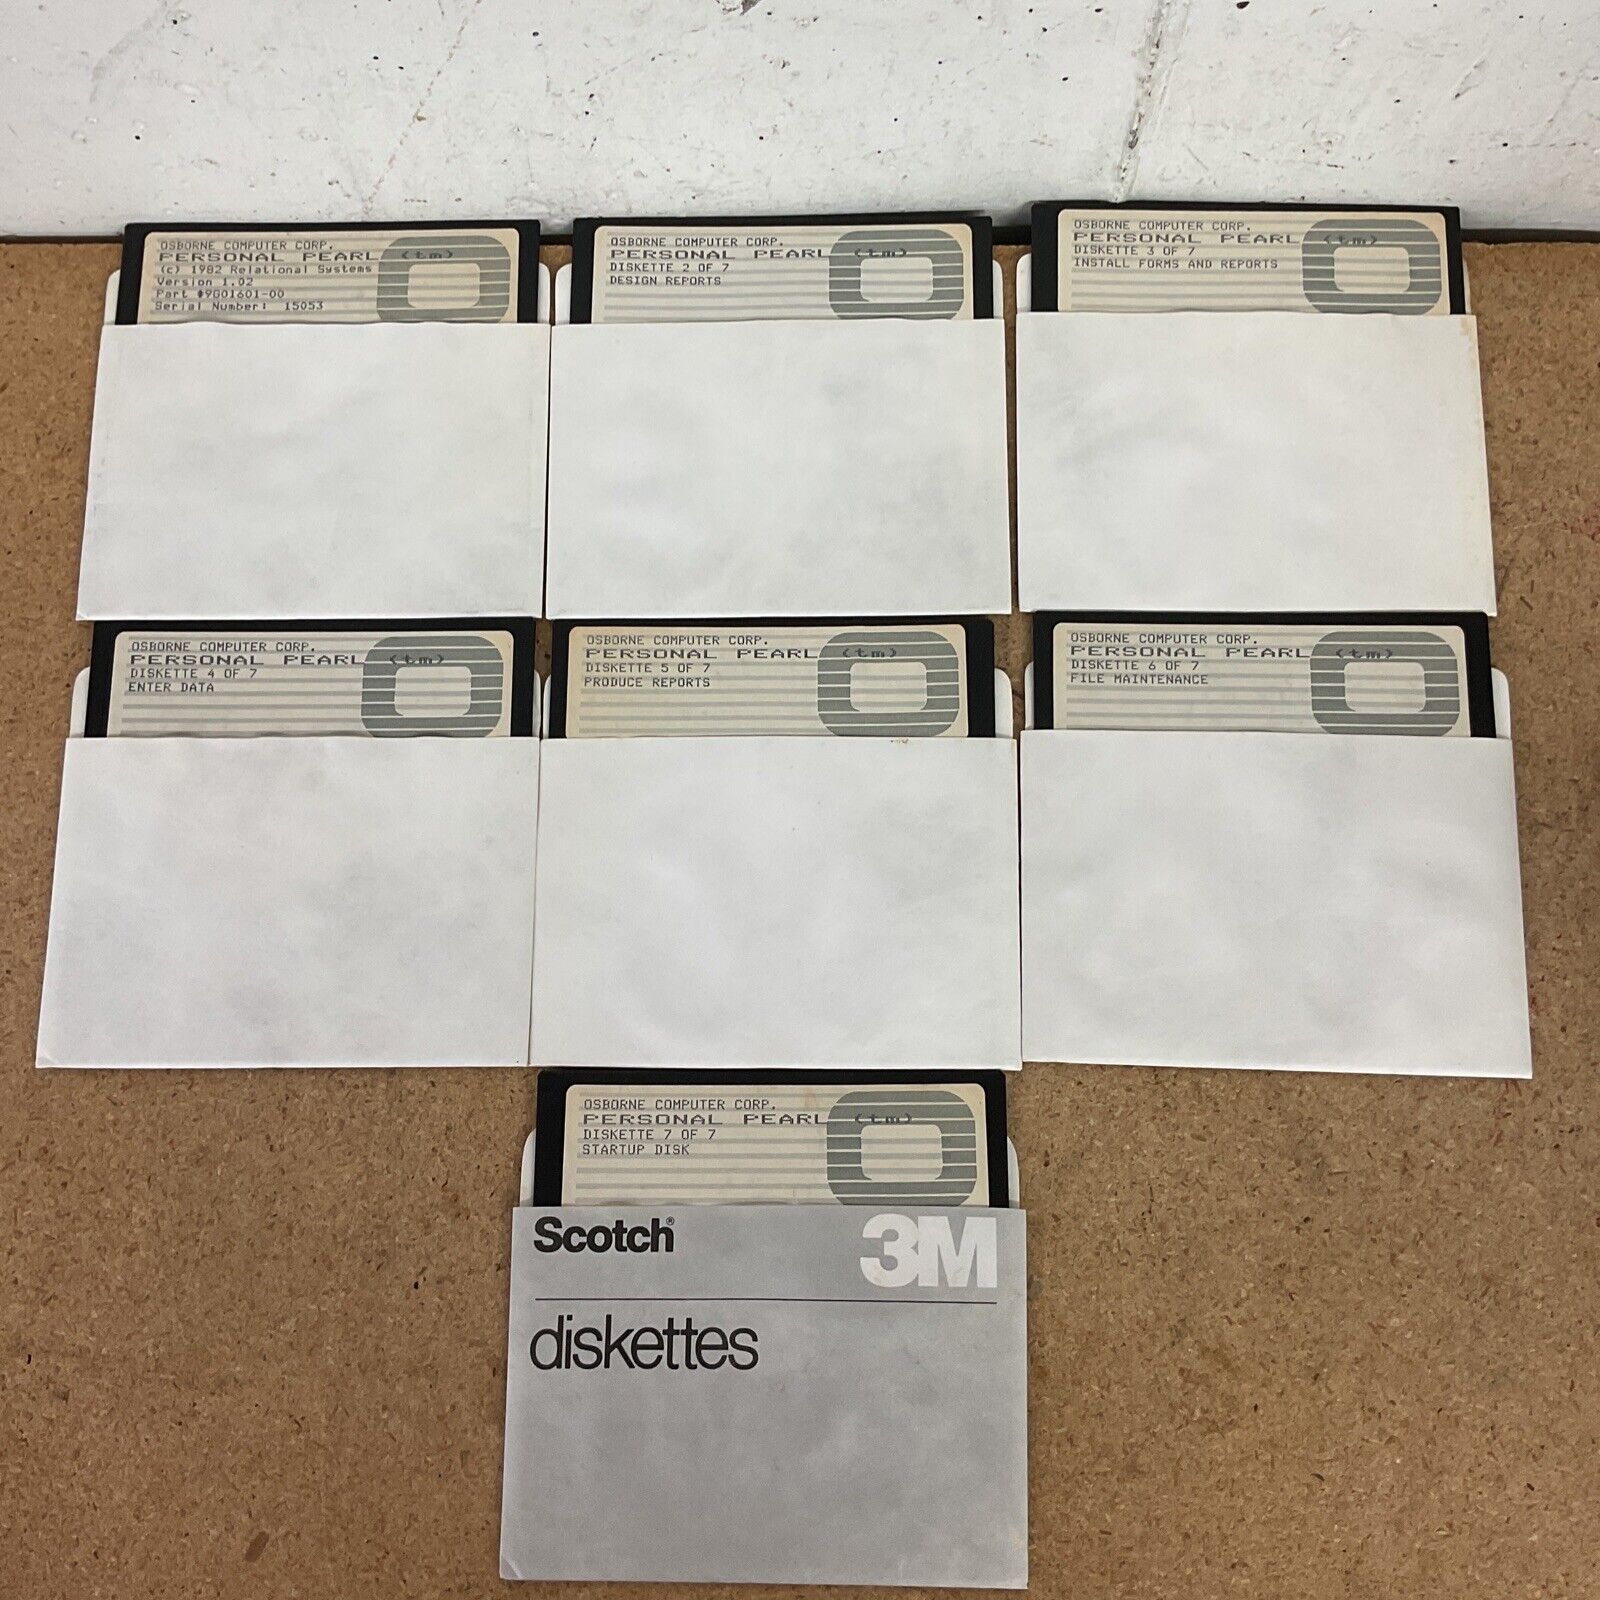 Vintage Osborne Software Personal Pearl Disks 1-7